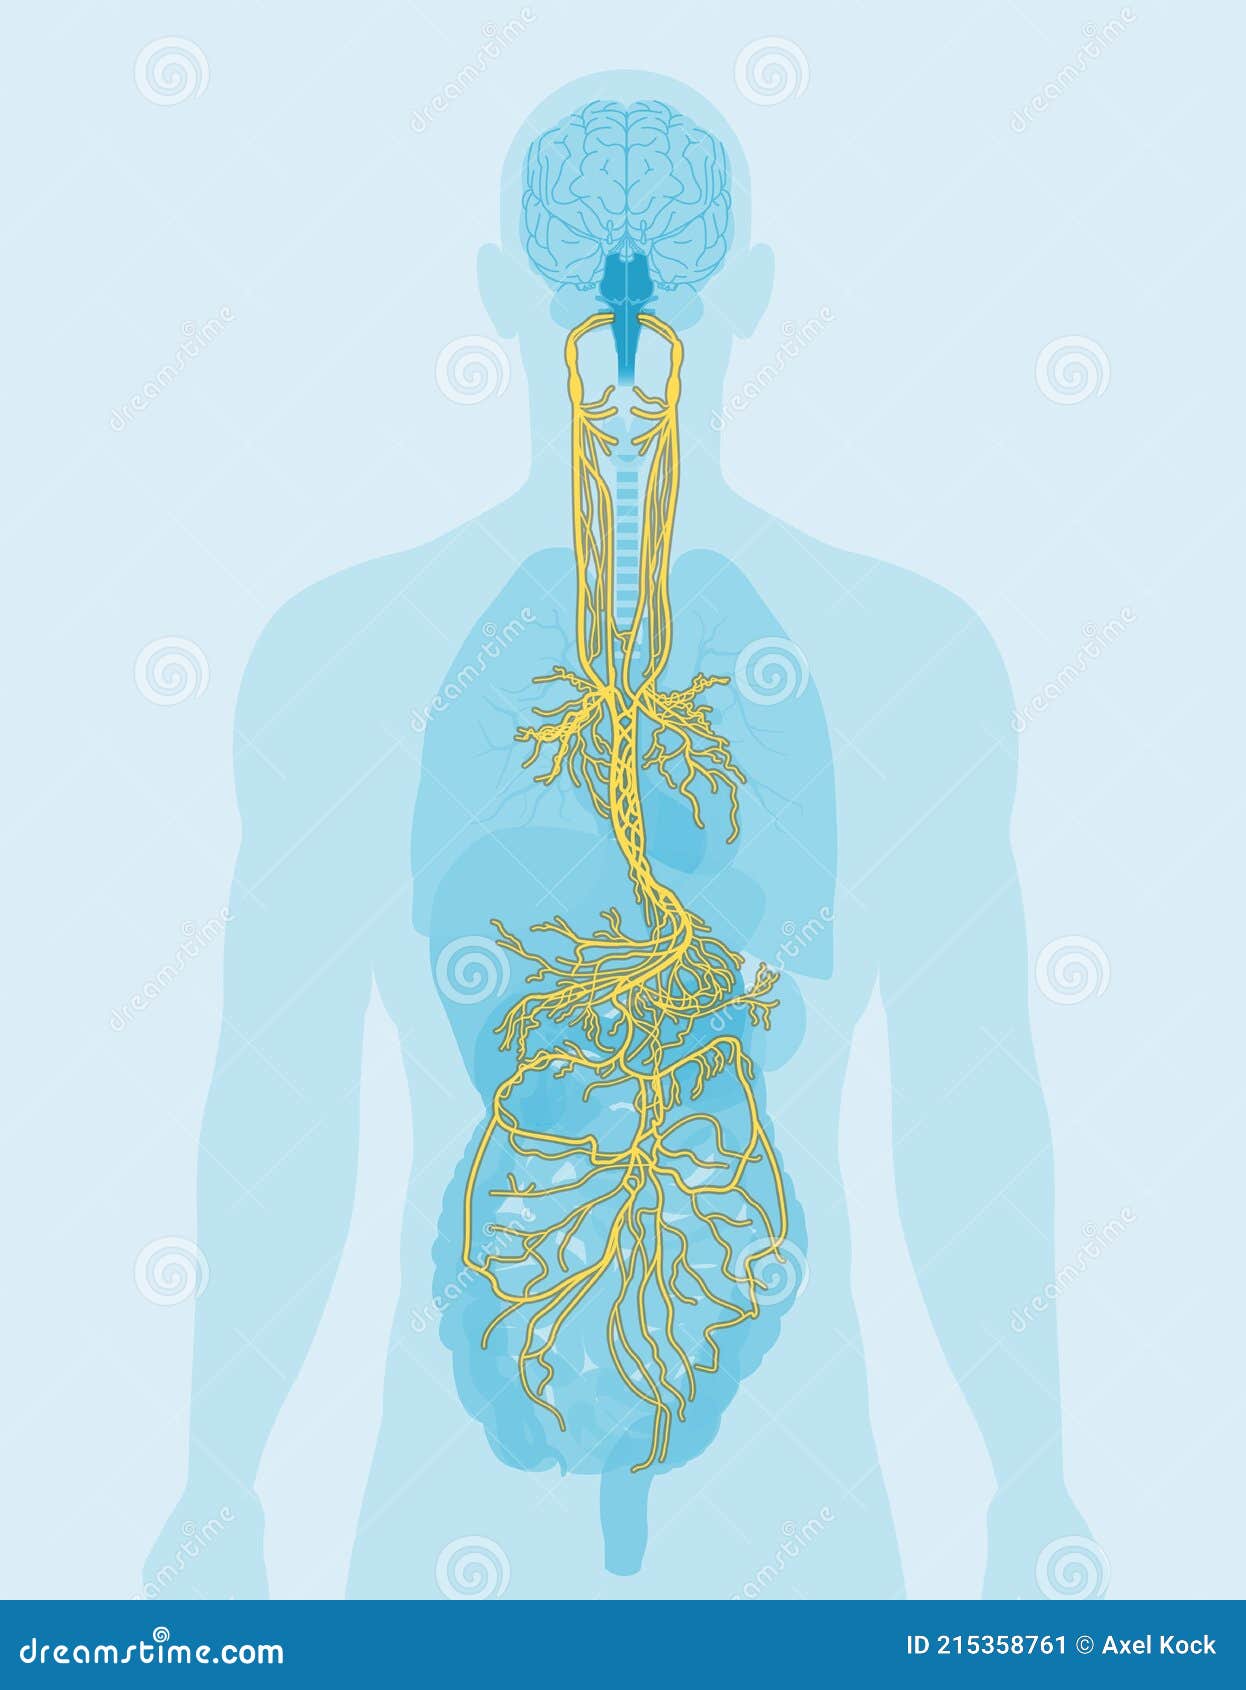 vagus nerve and human organs, medically 